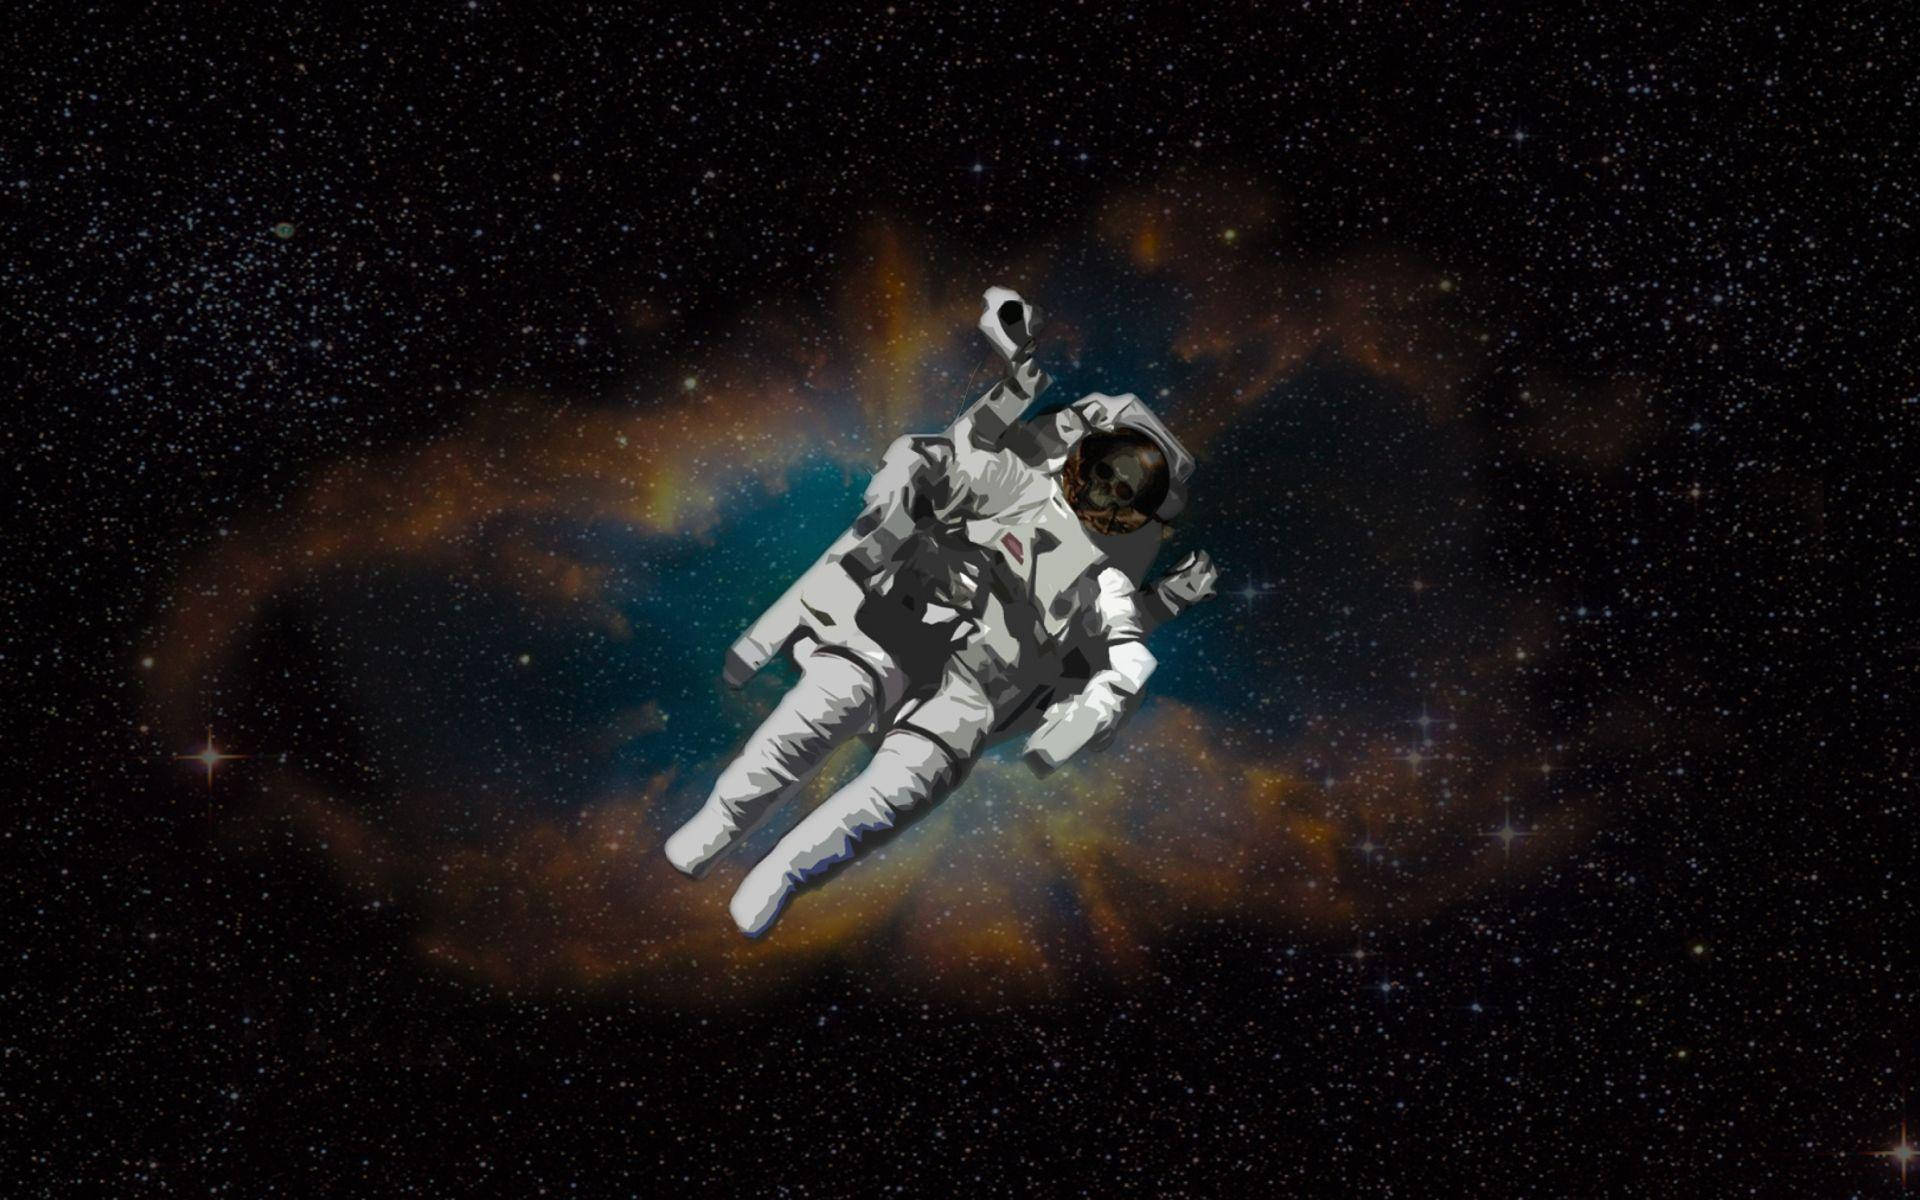 Stunning Image Of Spaceman Full Gear